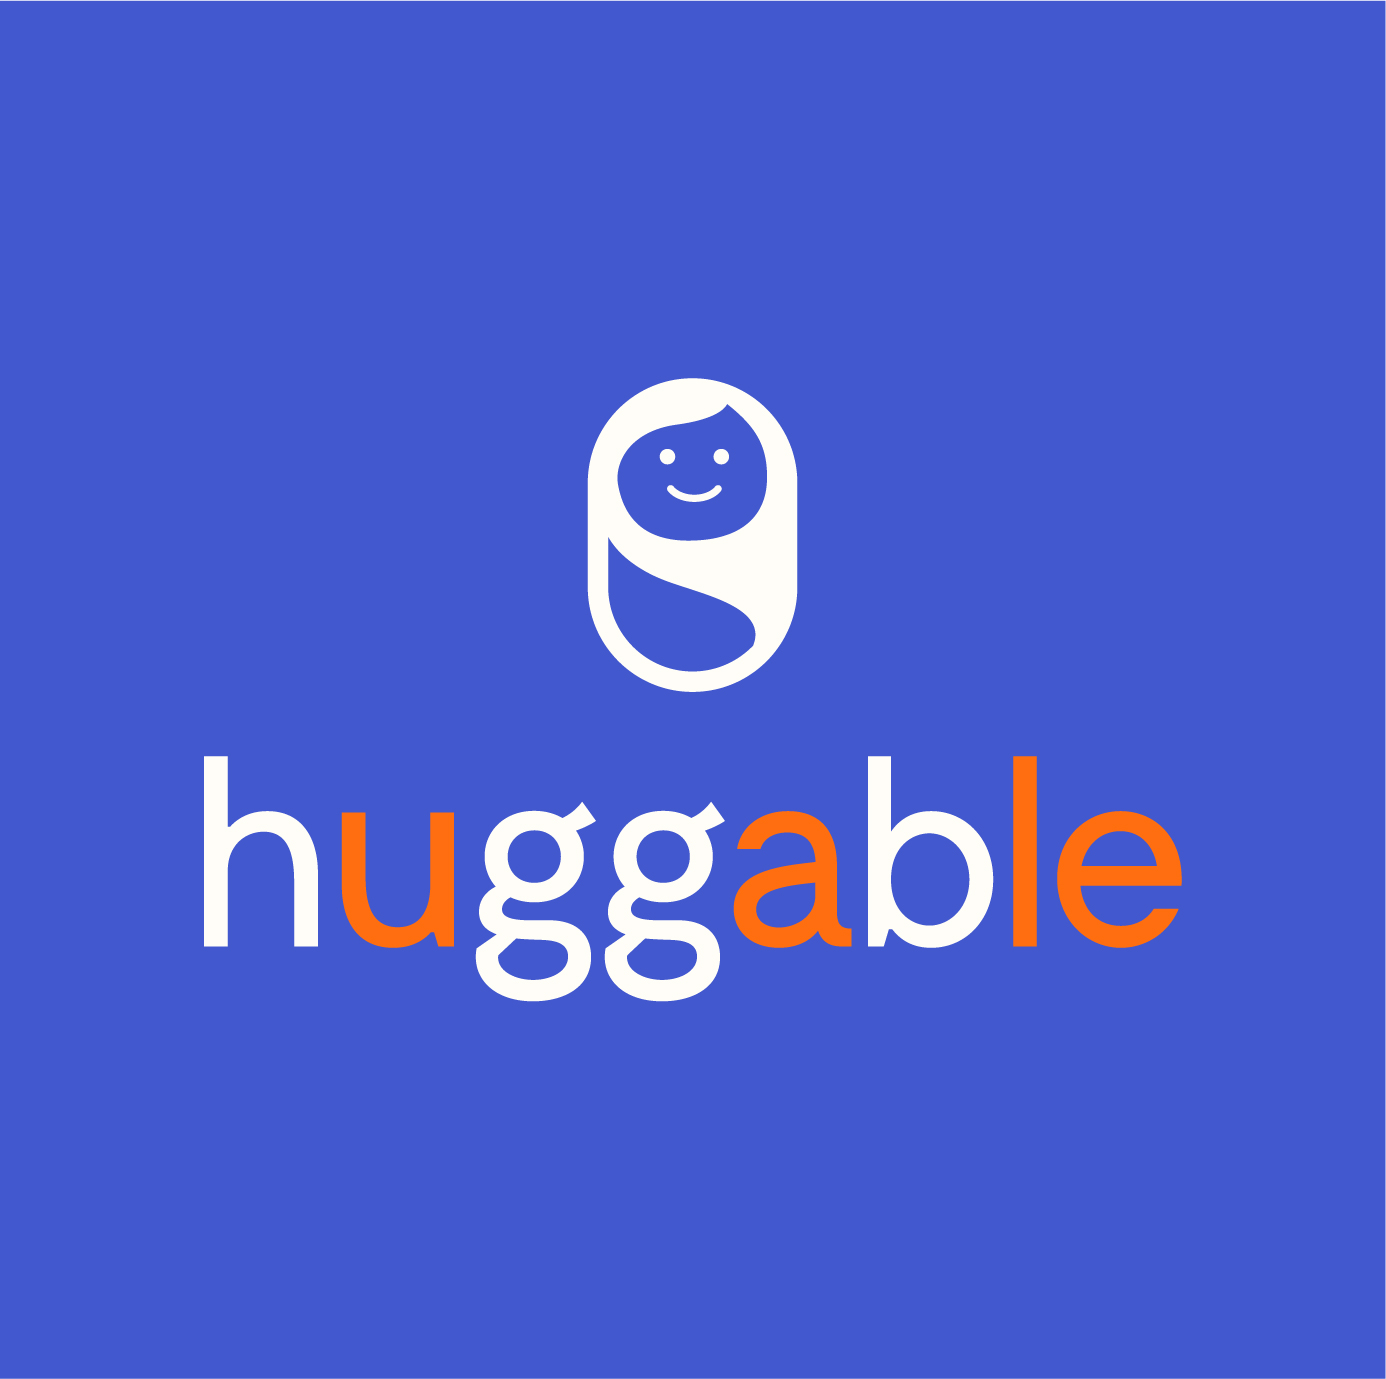 huggable-D1-2